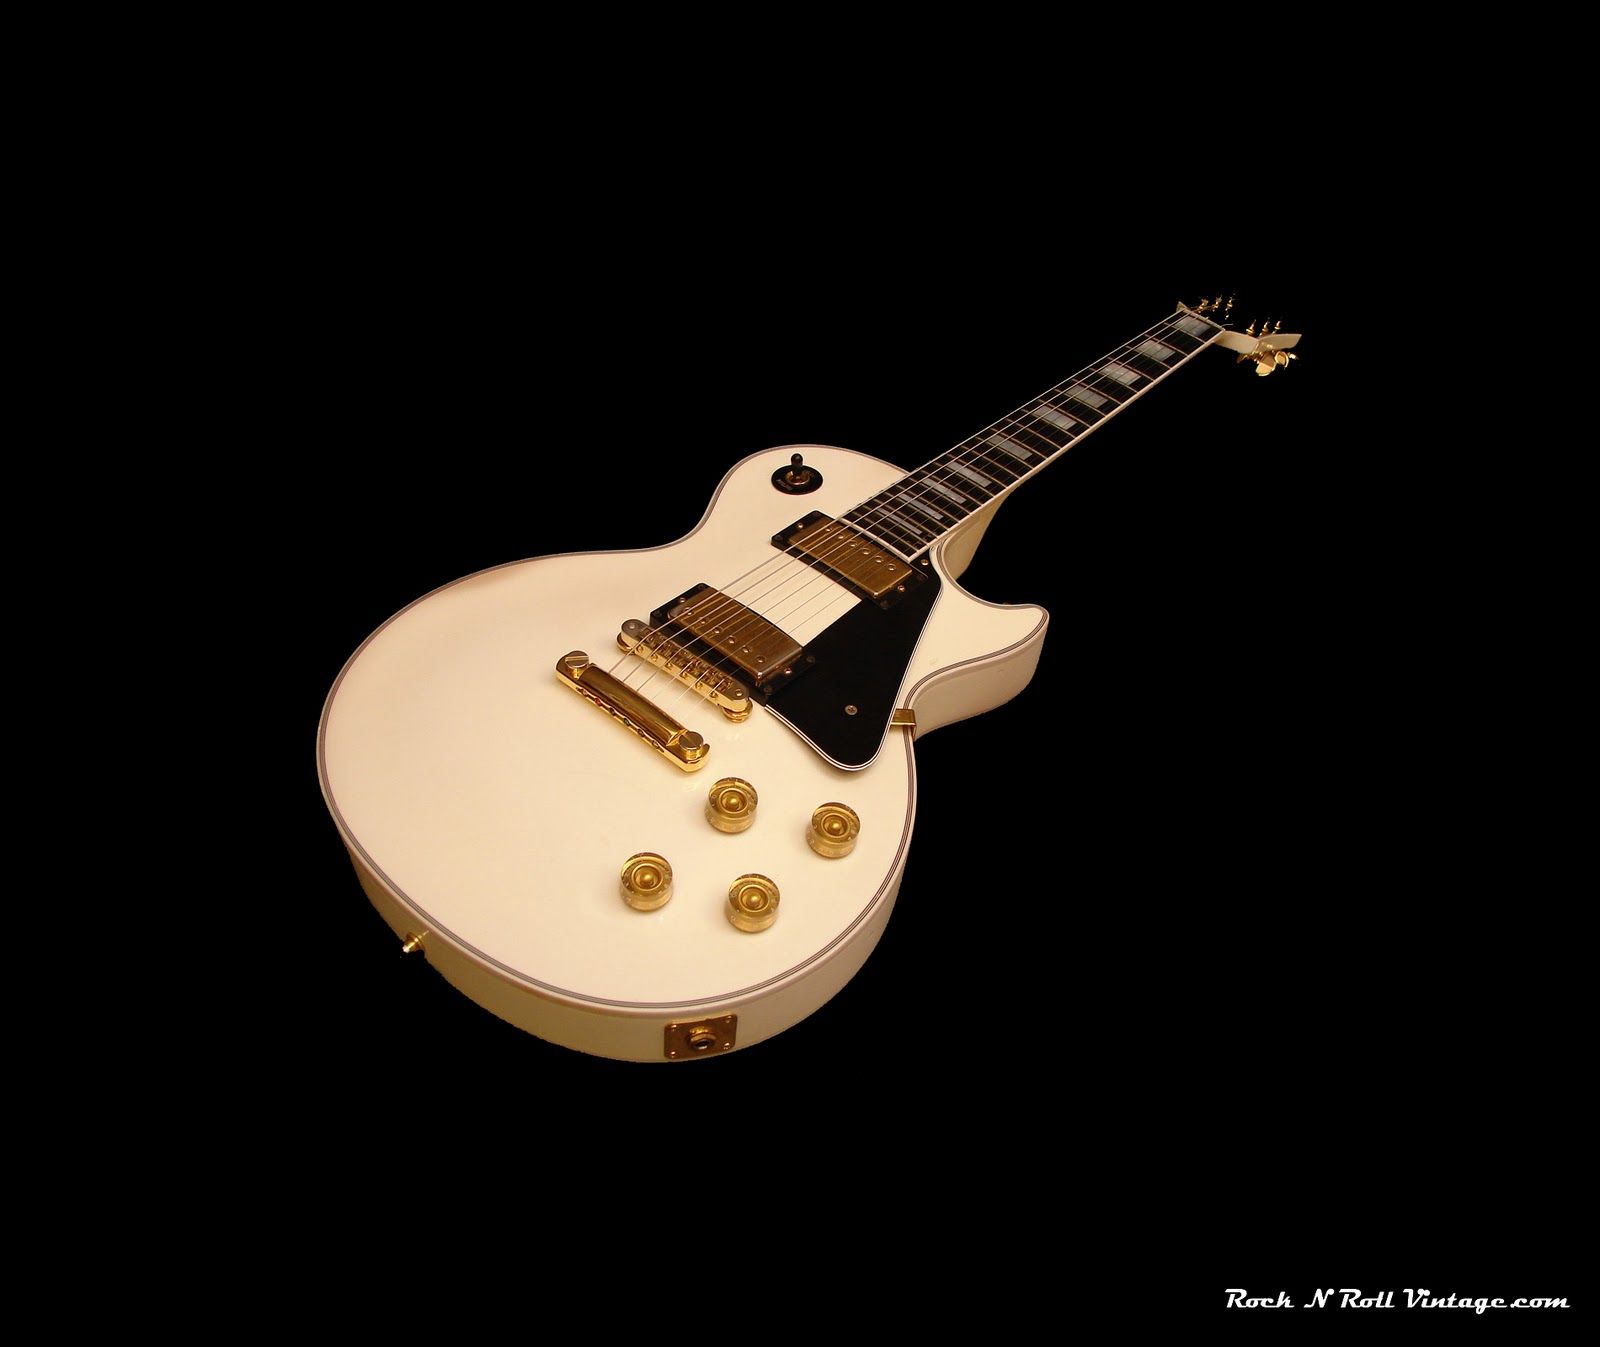 New HD wallon: Wallpaper Gibson Les Paul Guitar